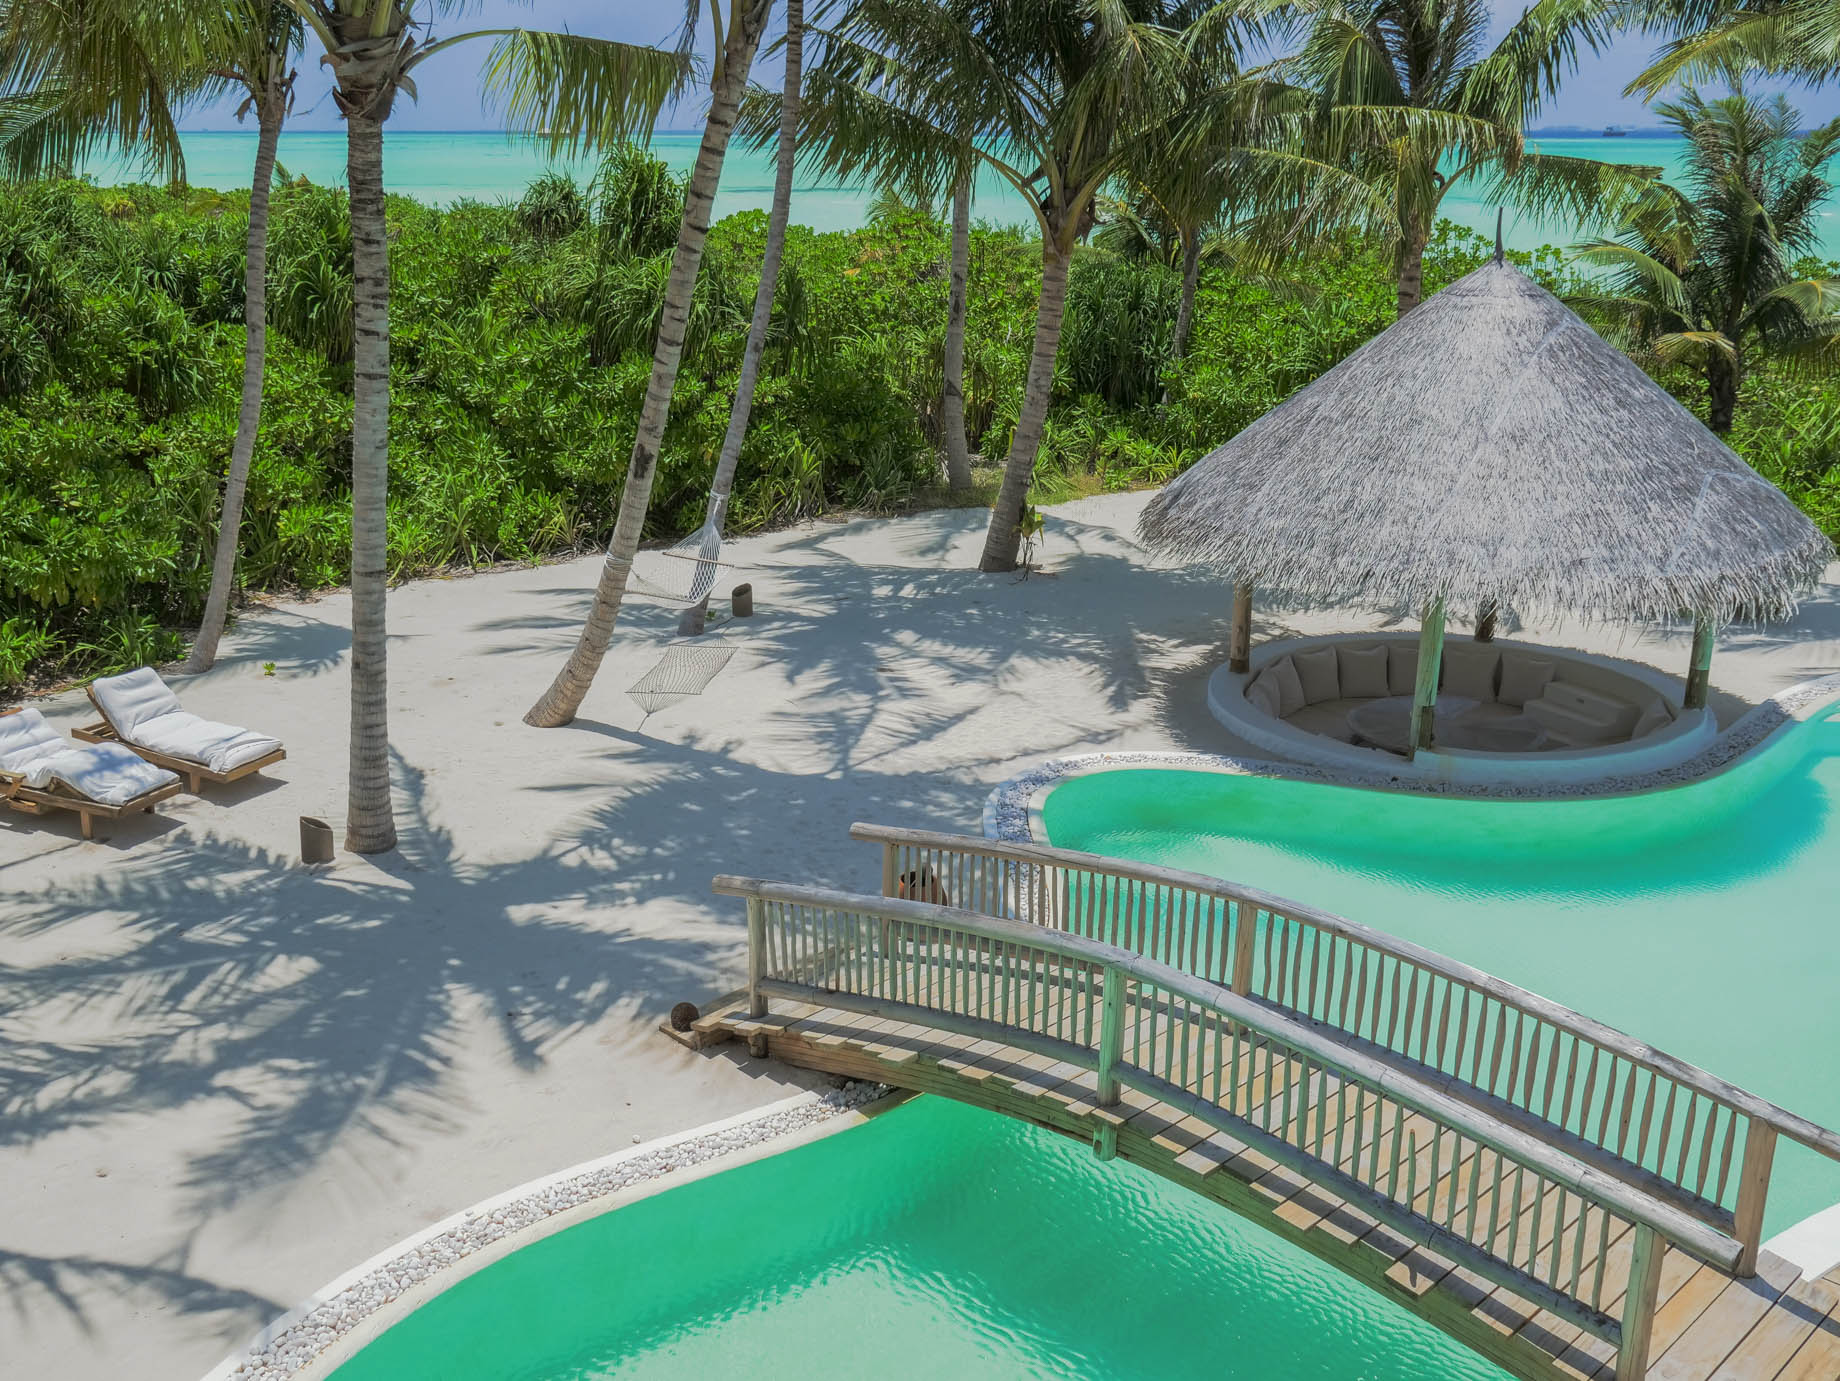 Soneva Jani Resort – Noonu Atoll, Medhufaru, Maldives – 4 Bedroom Island Reserve Villa Exterior Pool Bridge